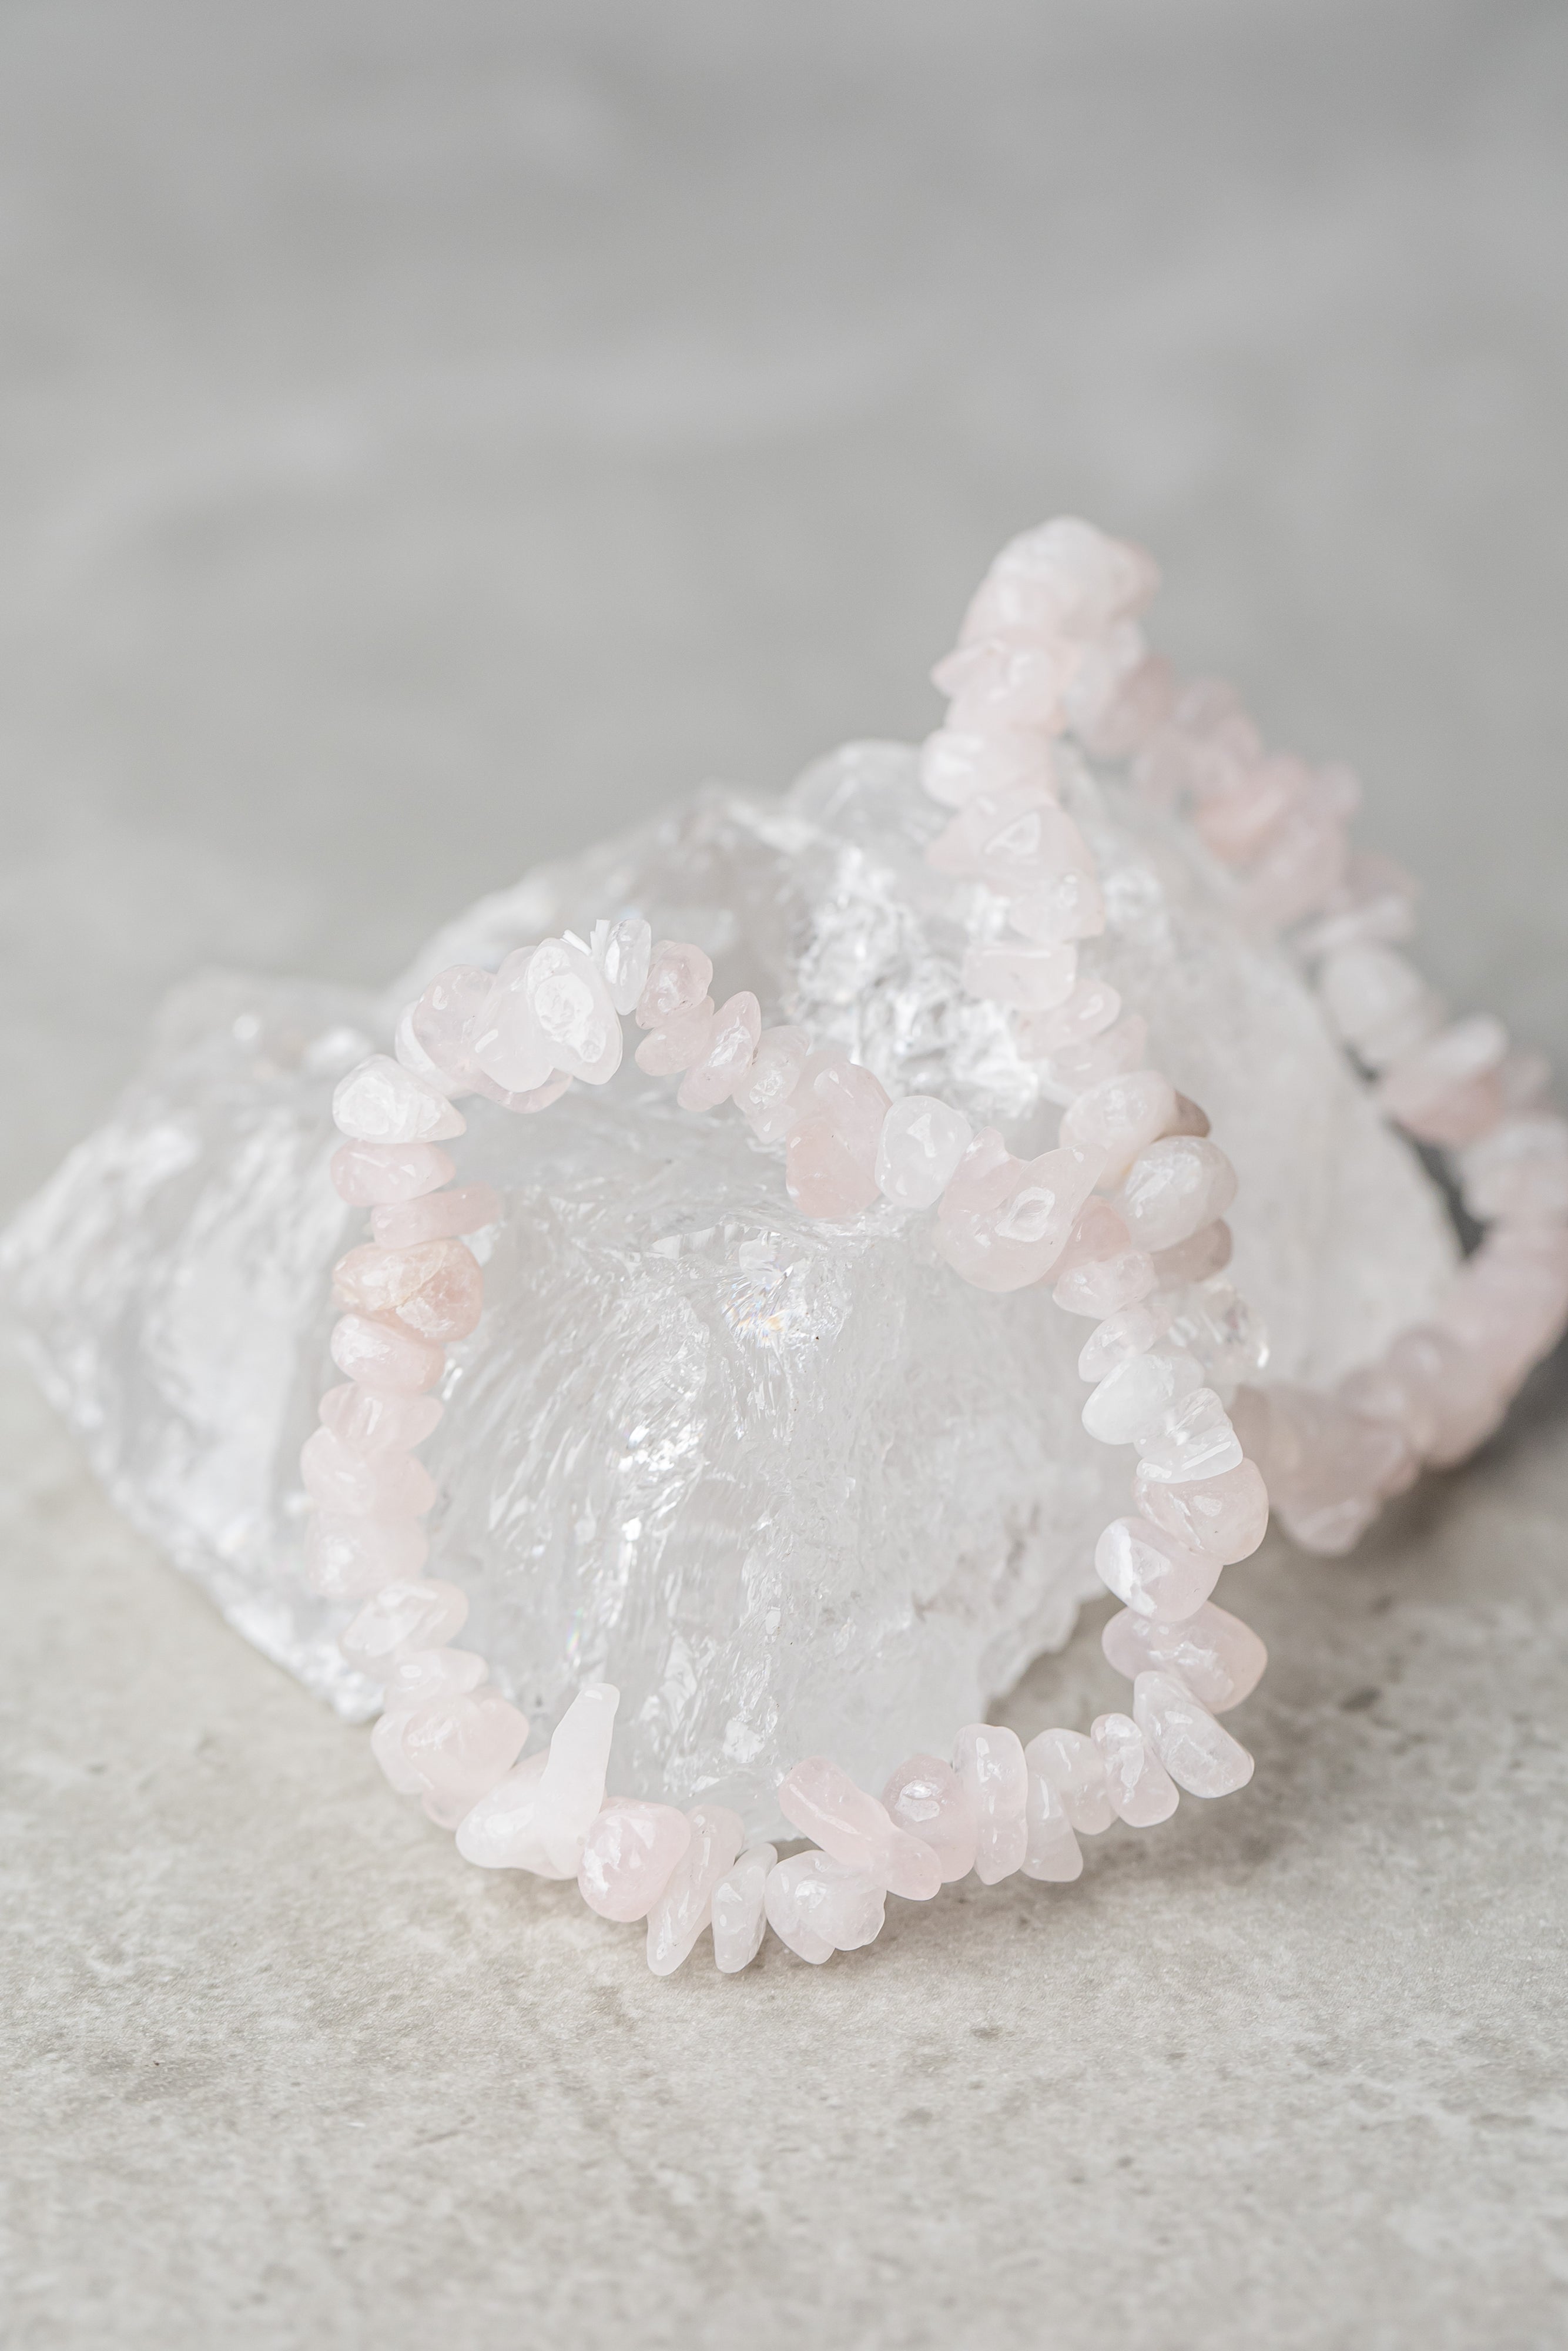 Rose Quartz Chip Bracelet - Loving Crystal for Emotional Healing, Unconditional Love &amp; Heart Chakra Balance - Everyday Rocks